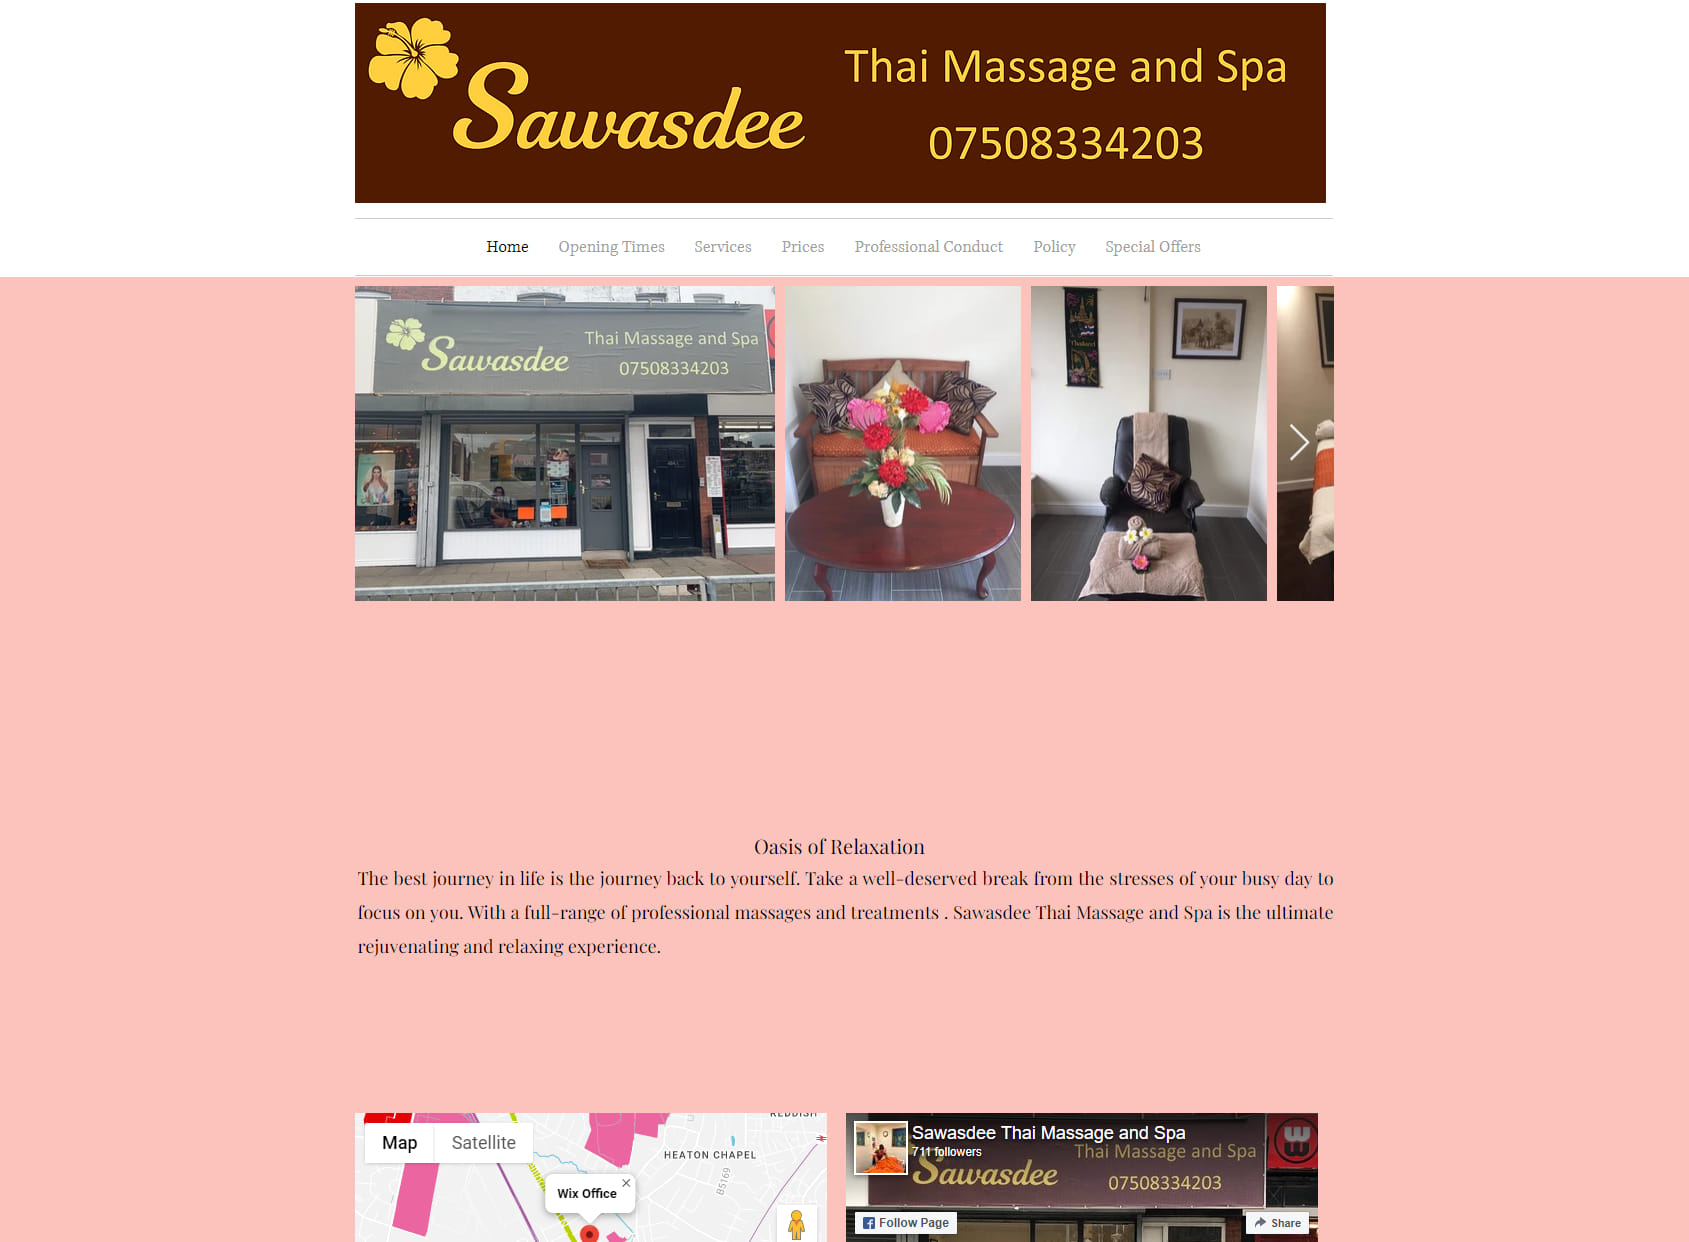 Sawasdee Thai Massage and Spa